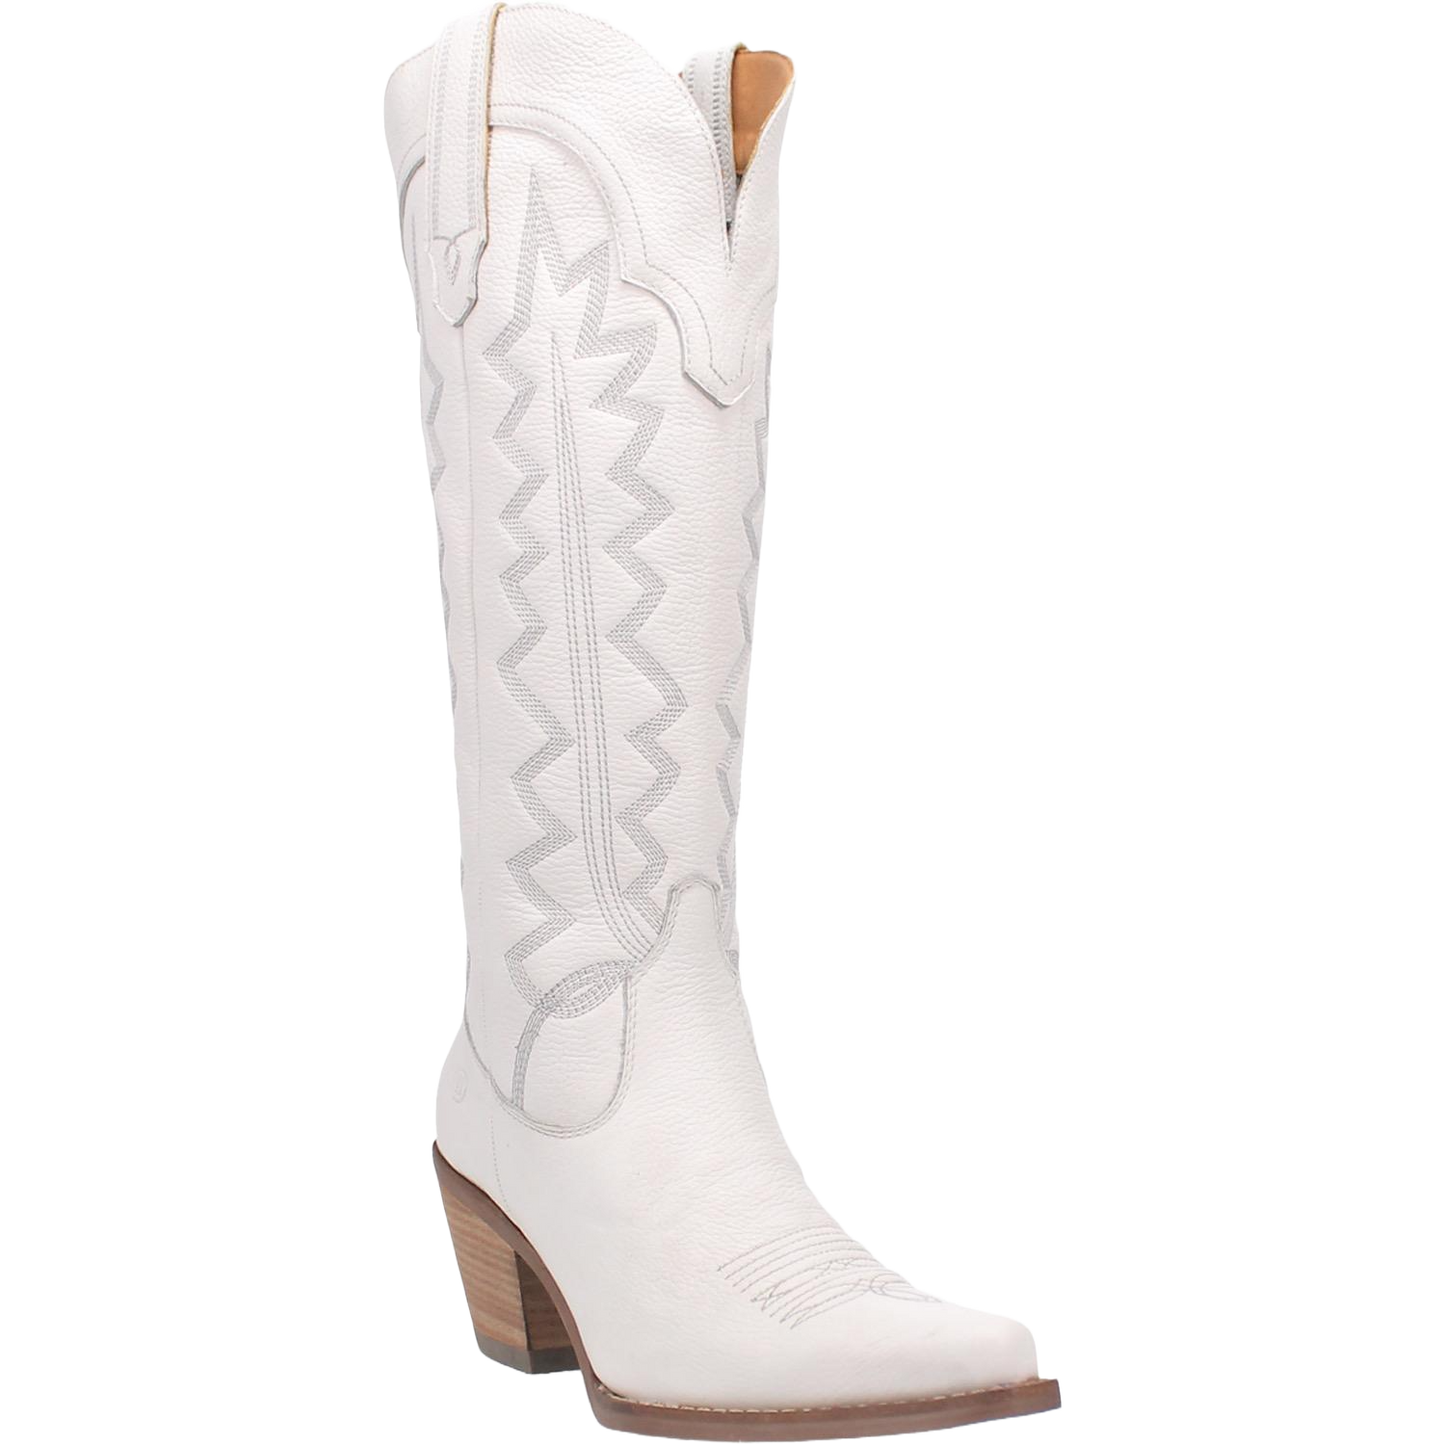 Dingo Ladies High Cotton White Snip Toe Boots DI936-WH